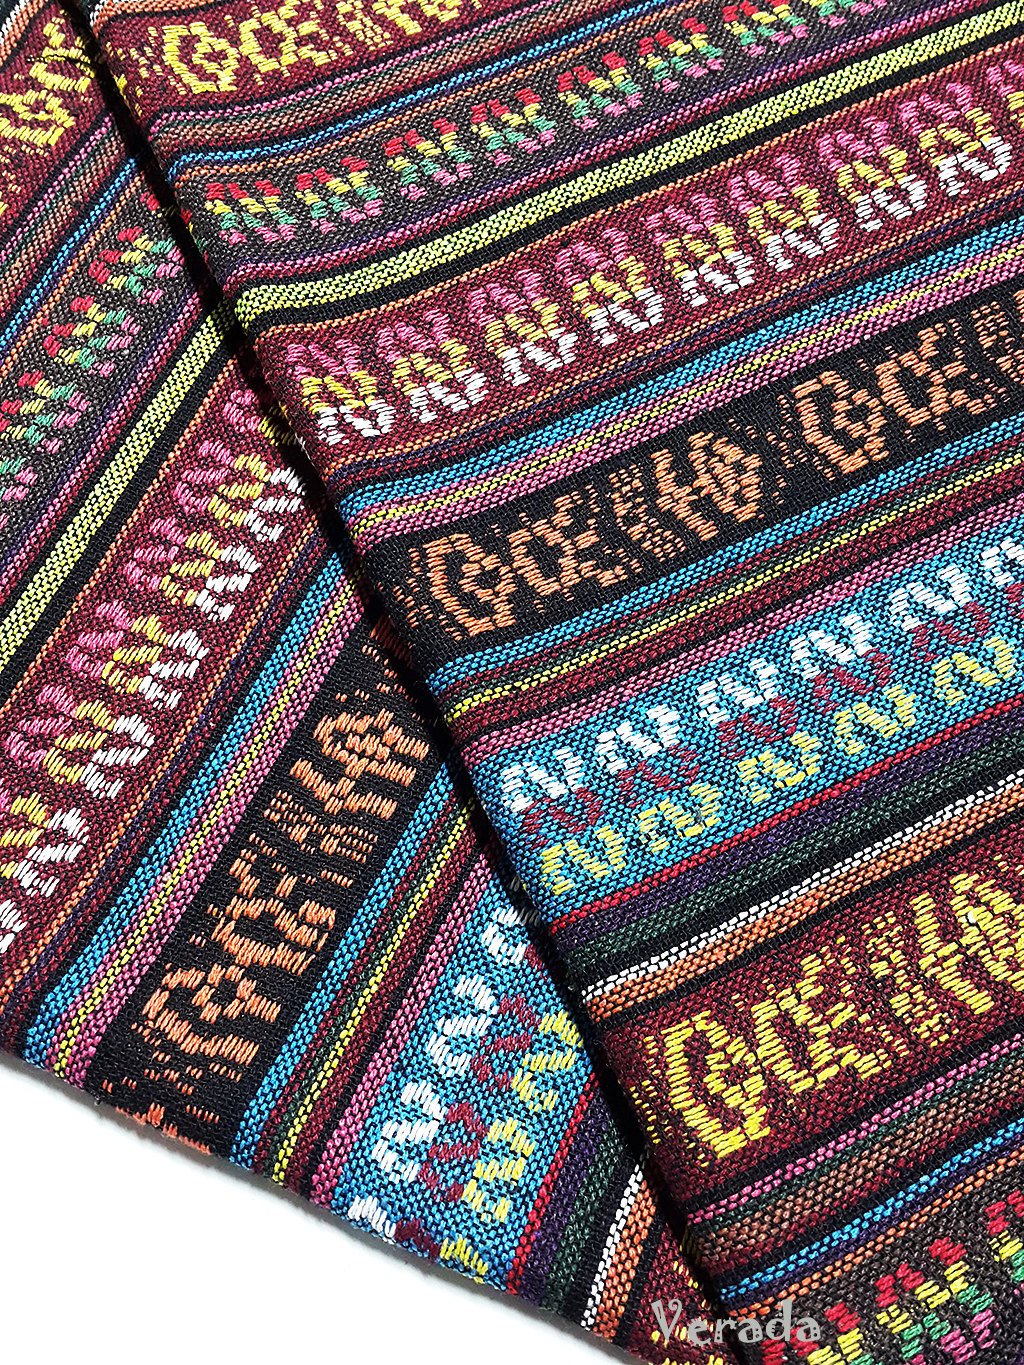 Thai Woven Cotton Tribal Fabric Textile 1/2 yard (WF119)